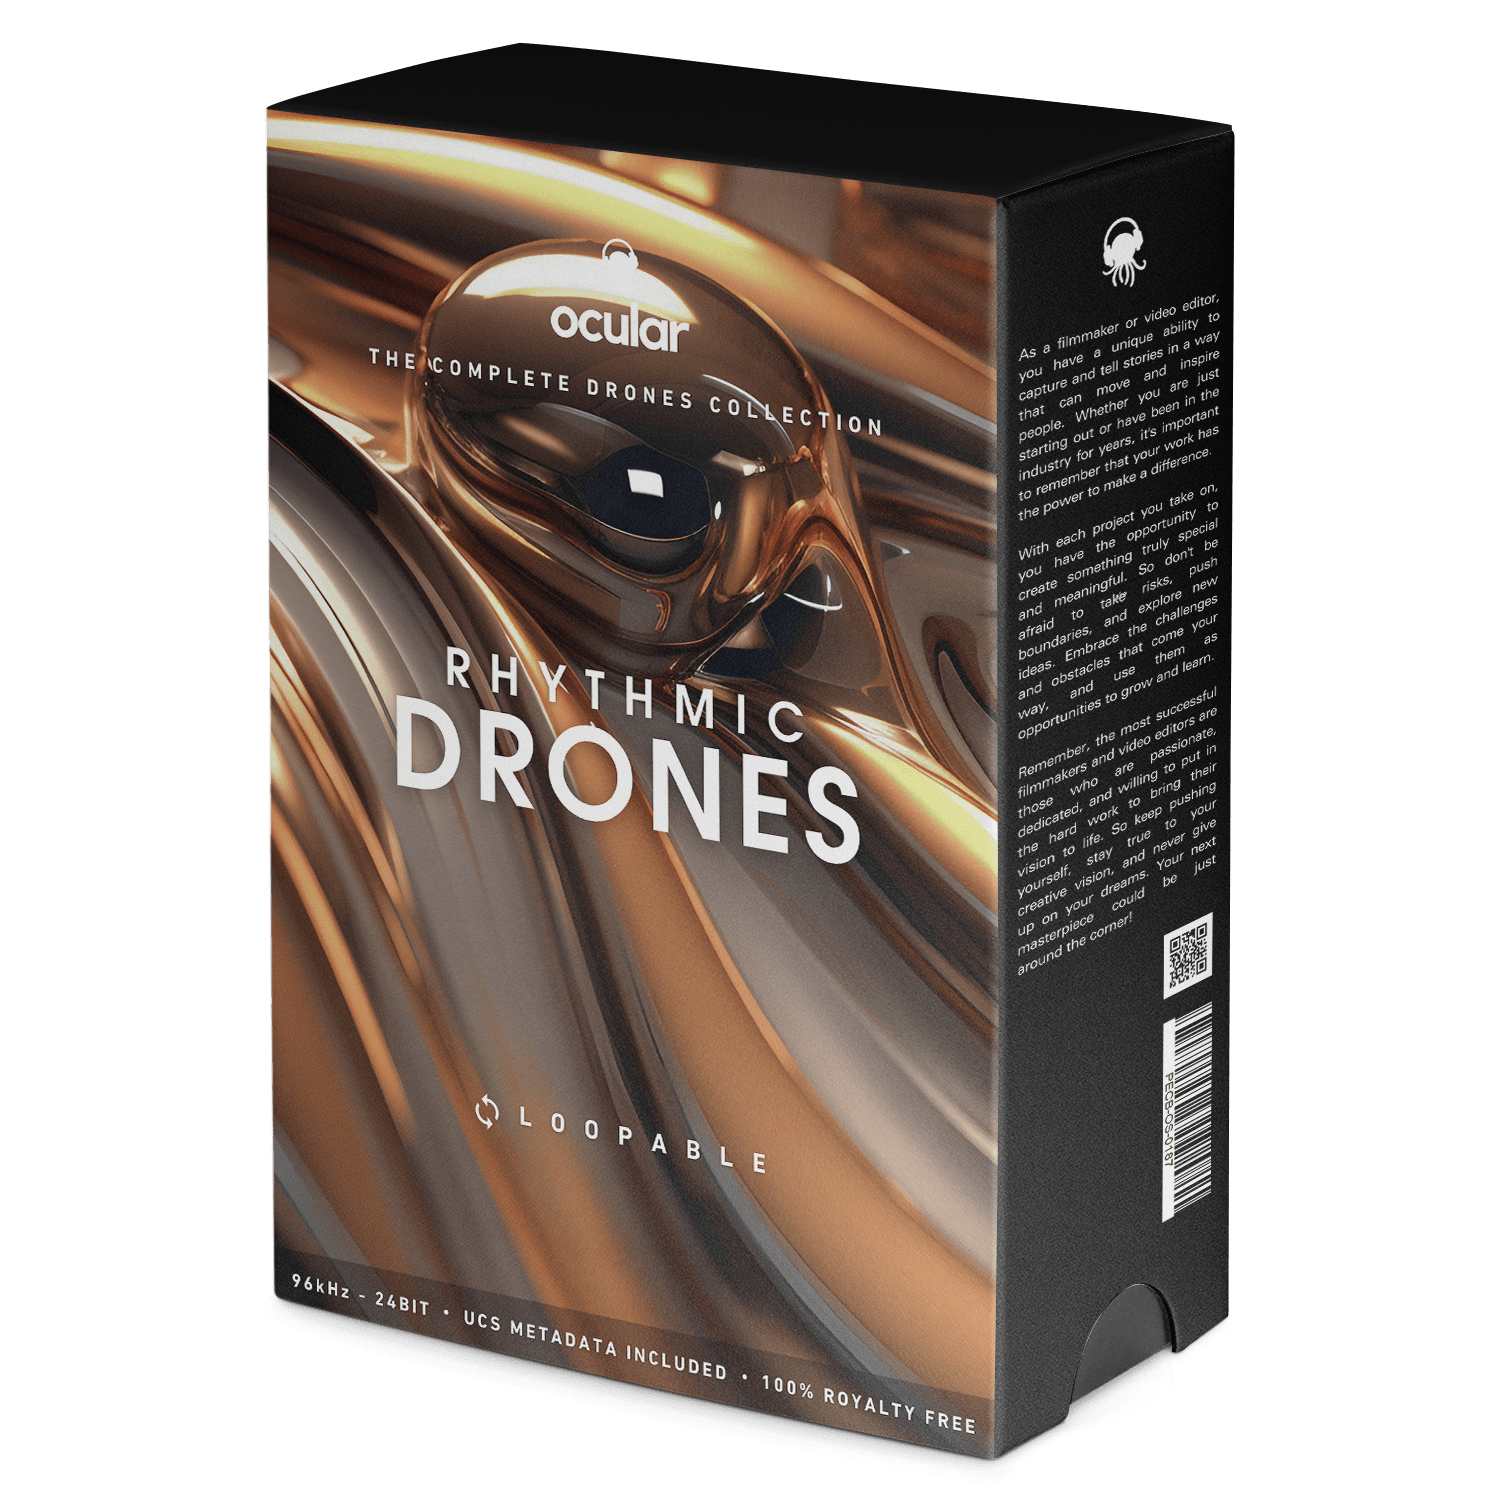 Rhythmic Drones Sound FX for video editing.